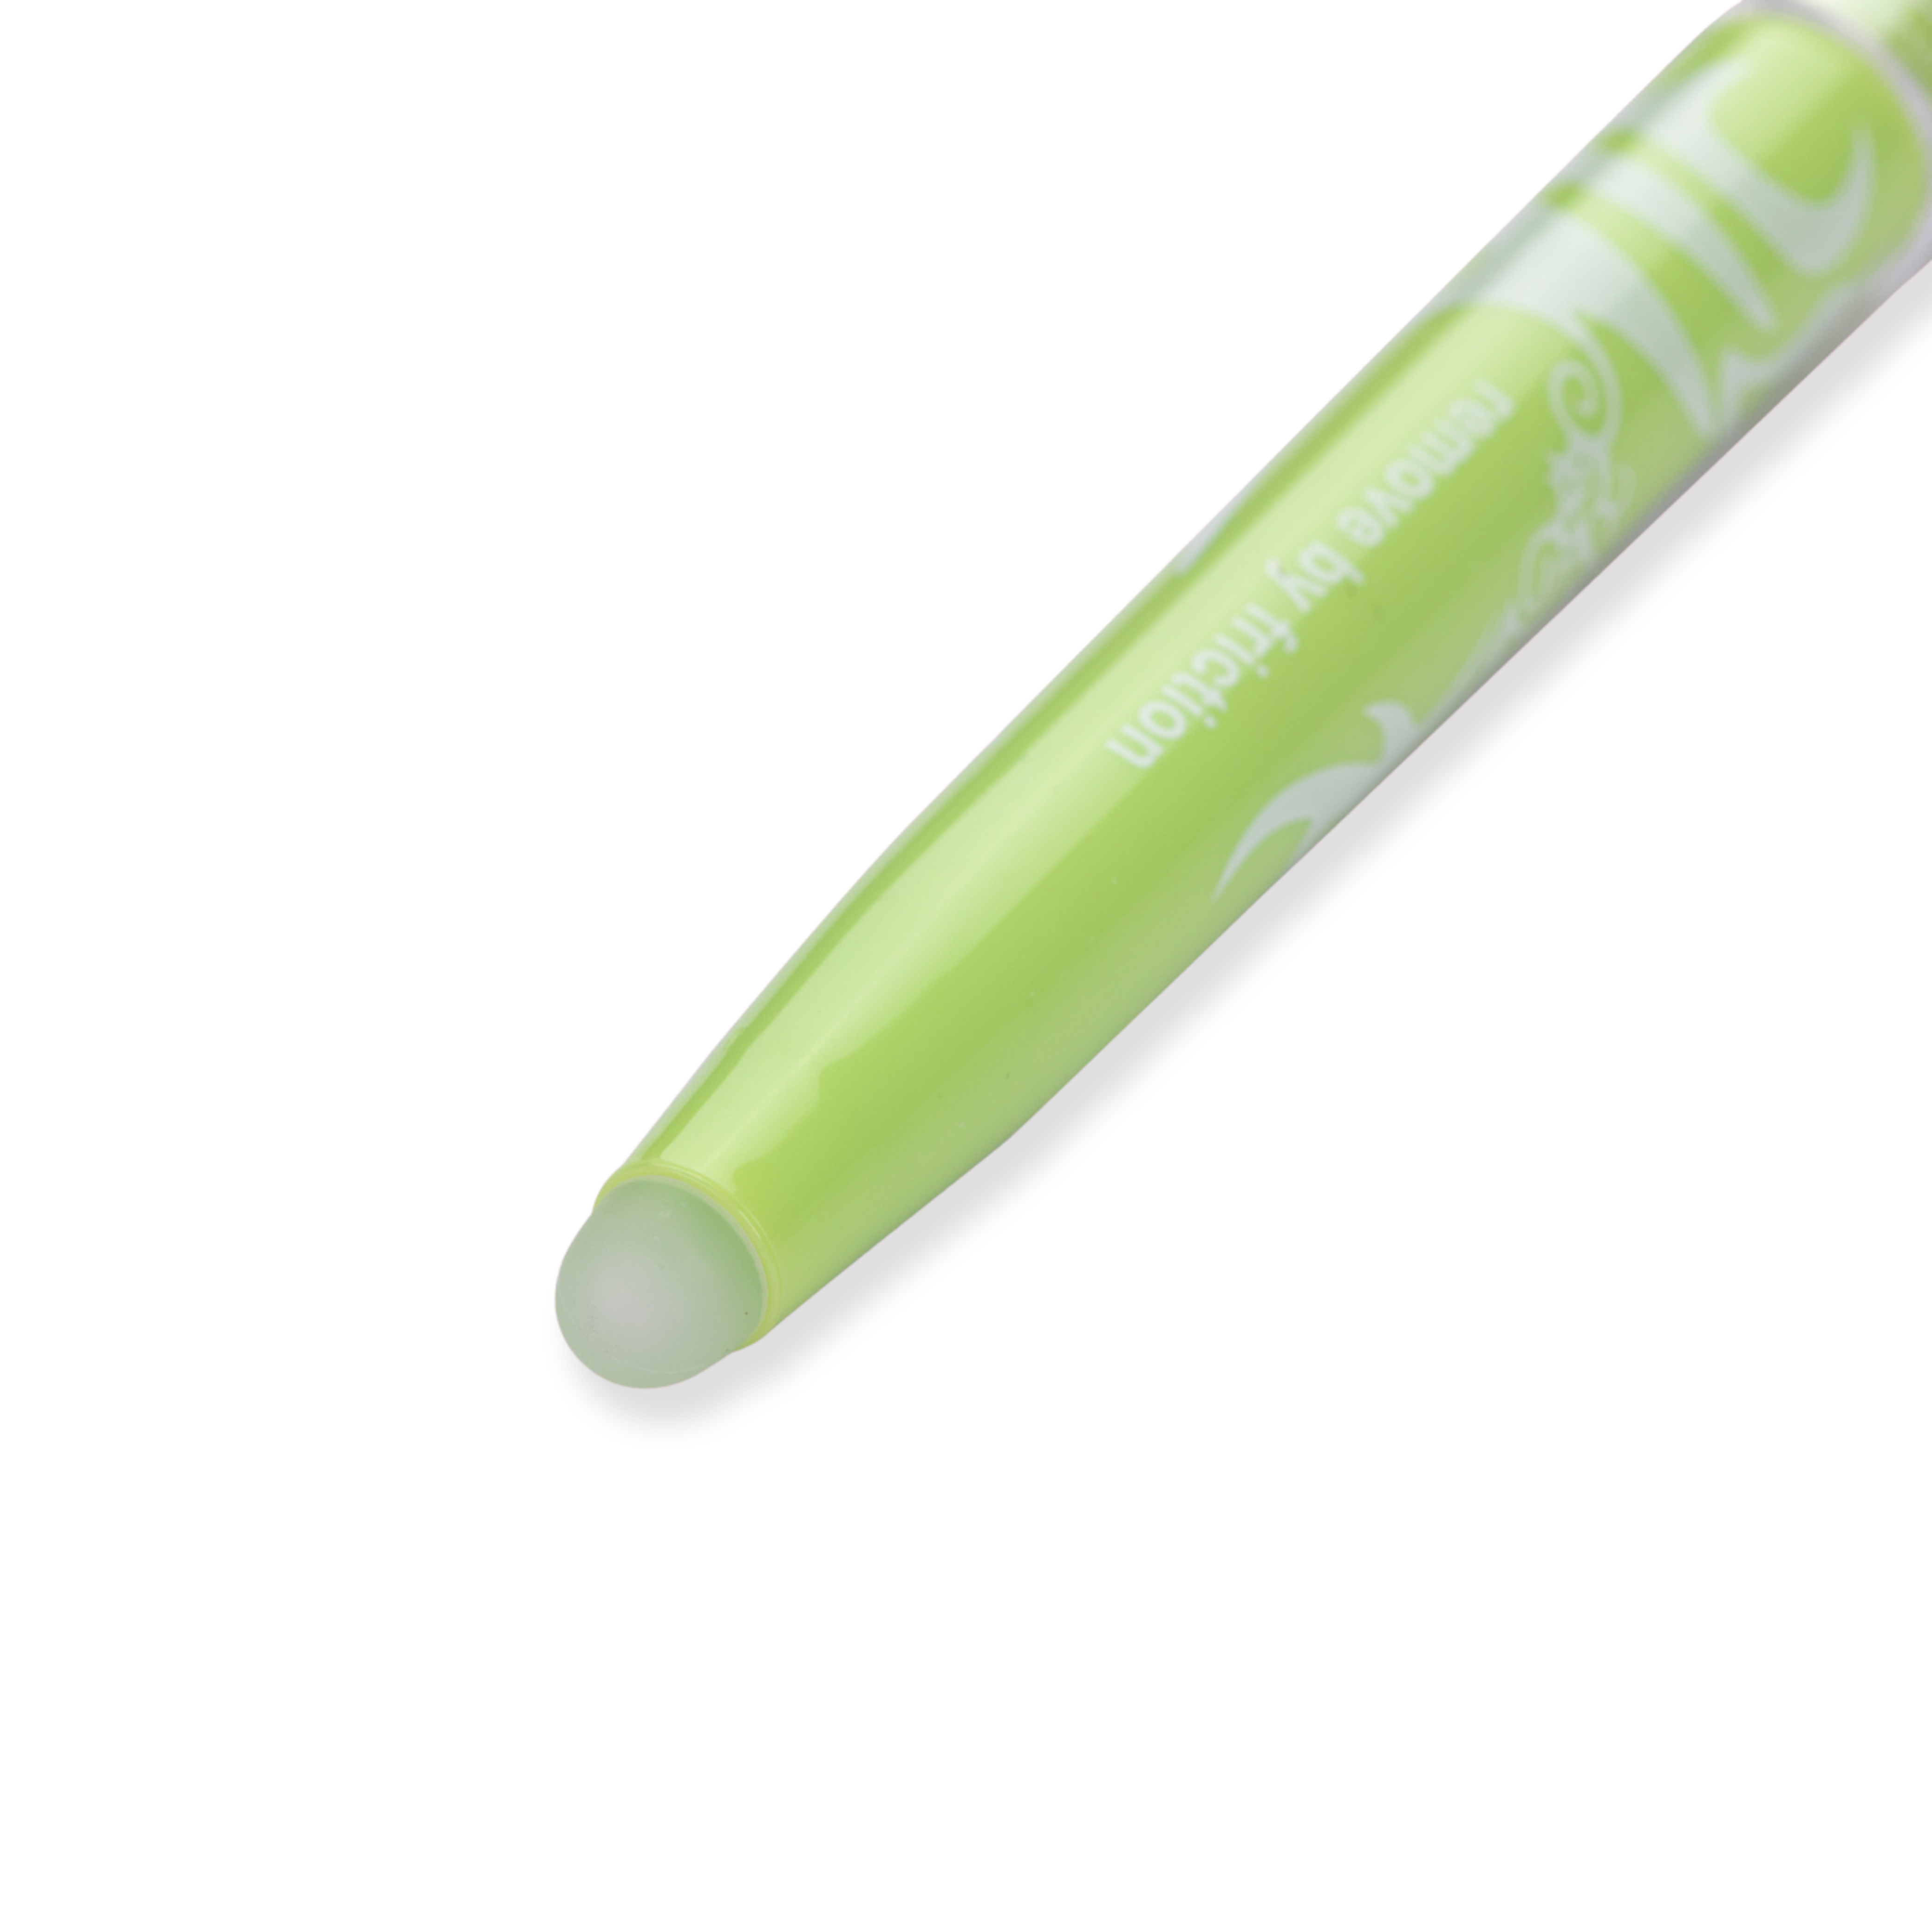 Pilot FriXion Light Natural Colors Highlighter pen - Medium Tip - Light Green